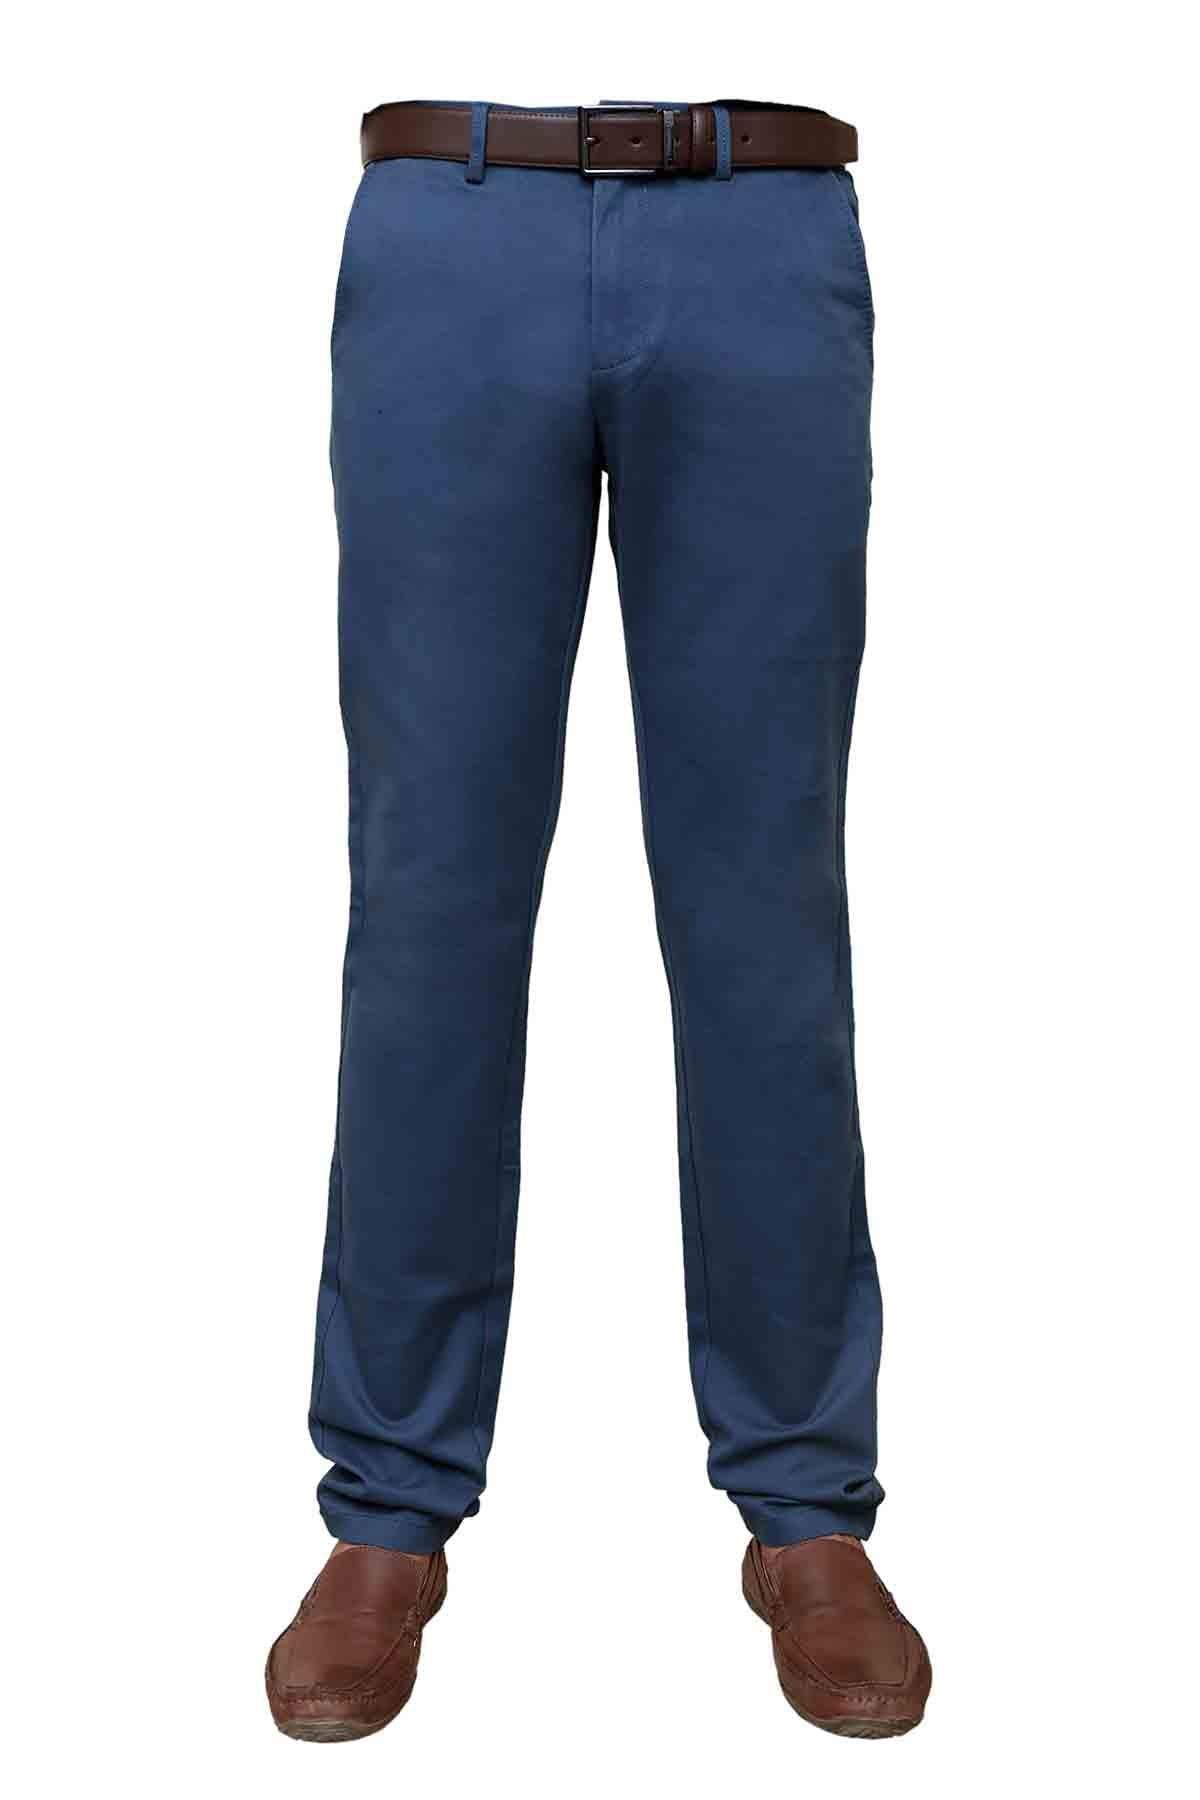 Casual Pant Five Pocket Blue at Charcoal Clothing